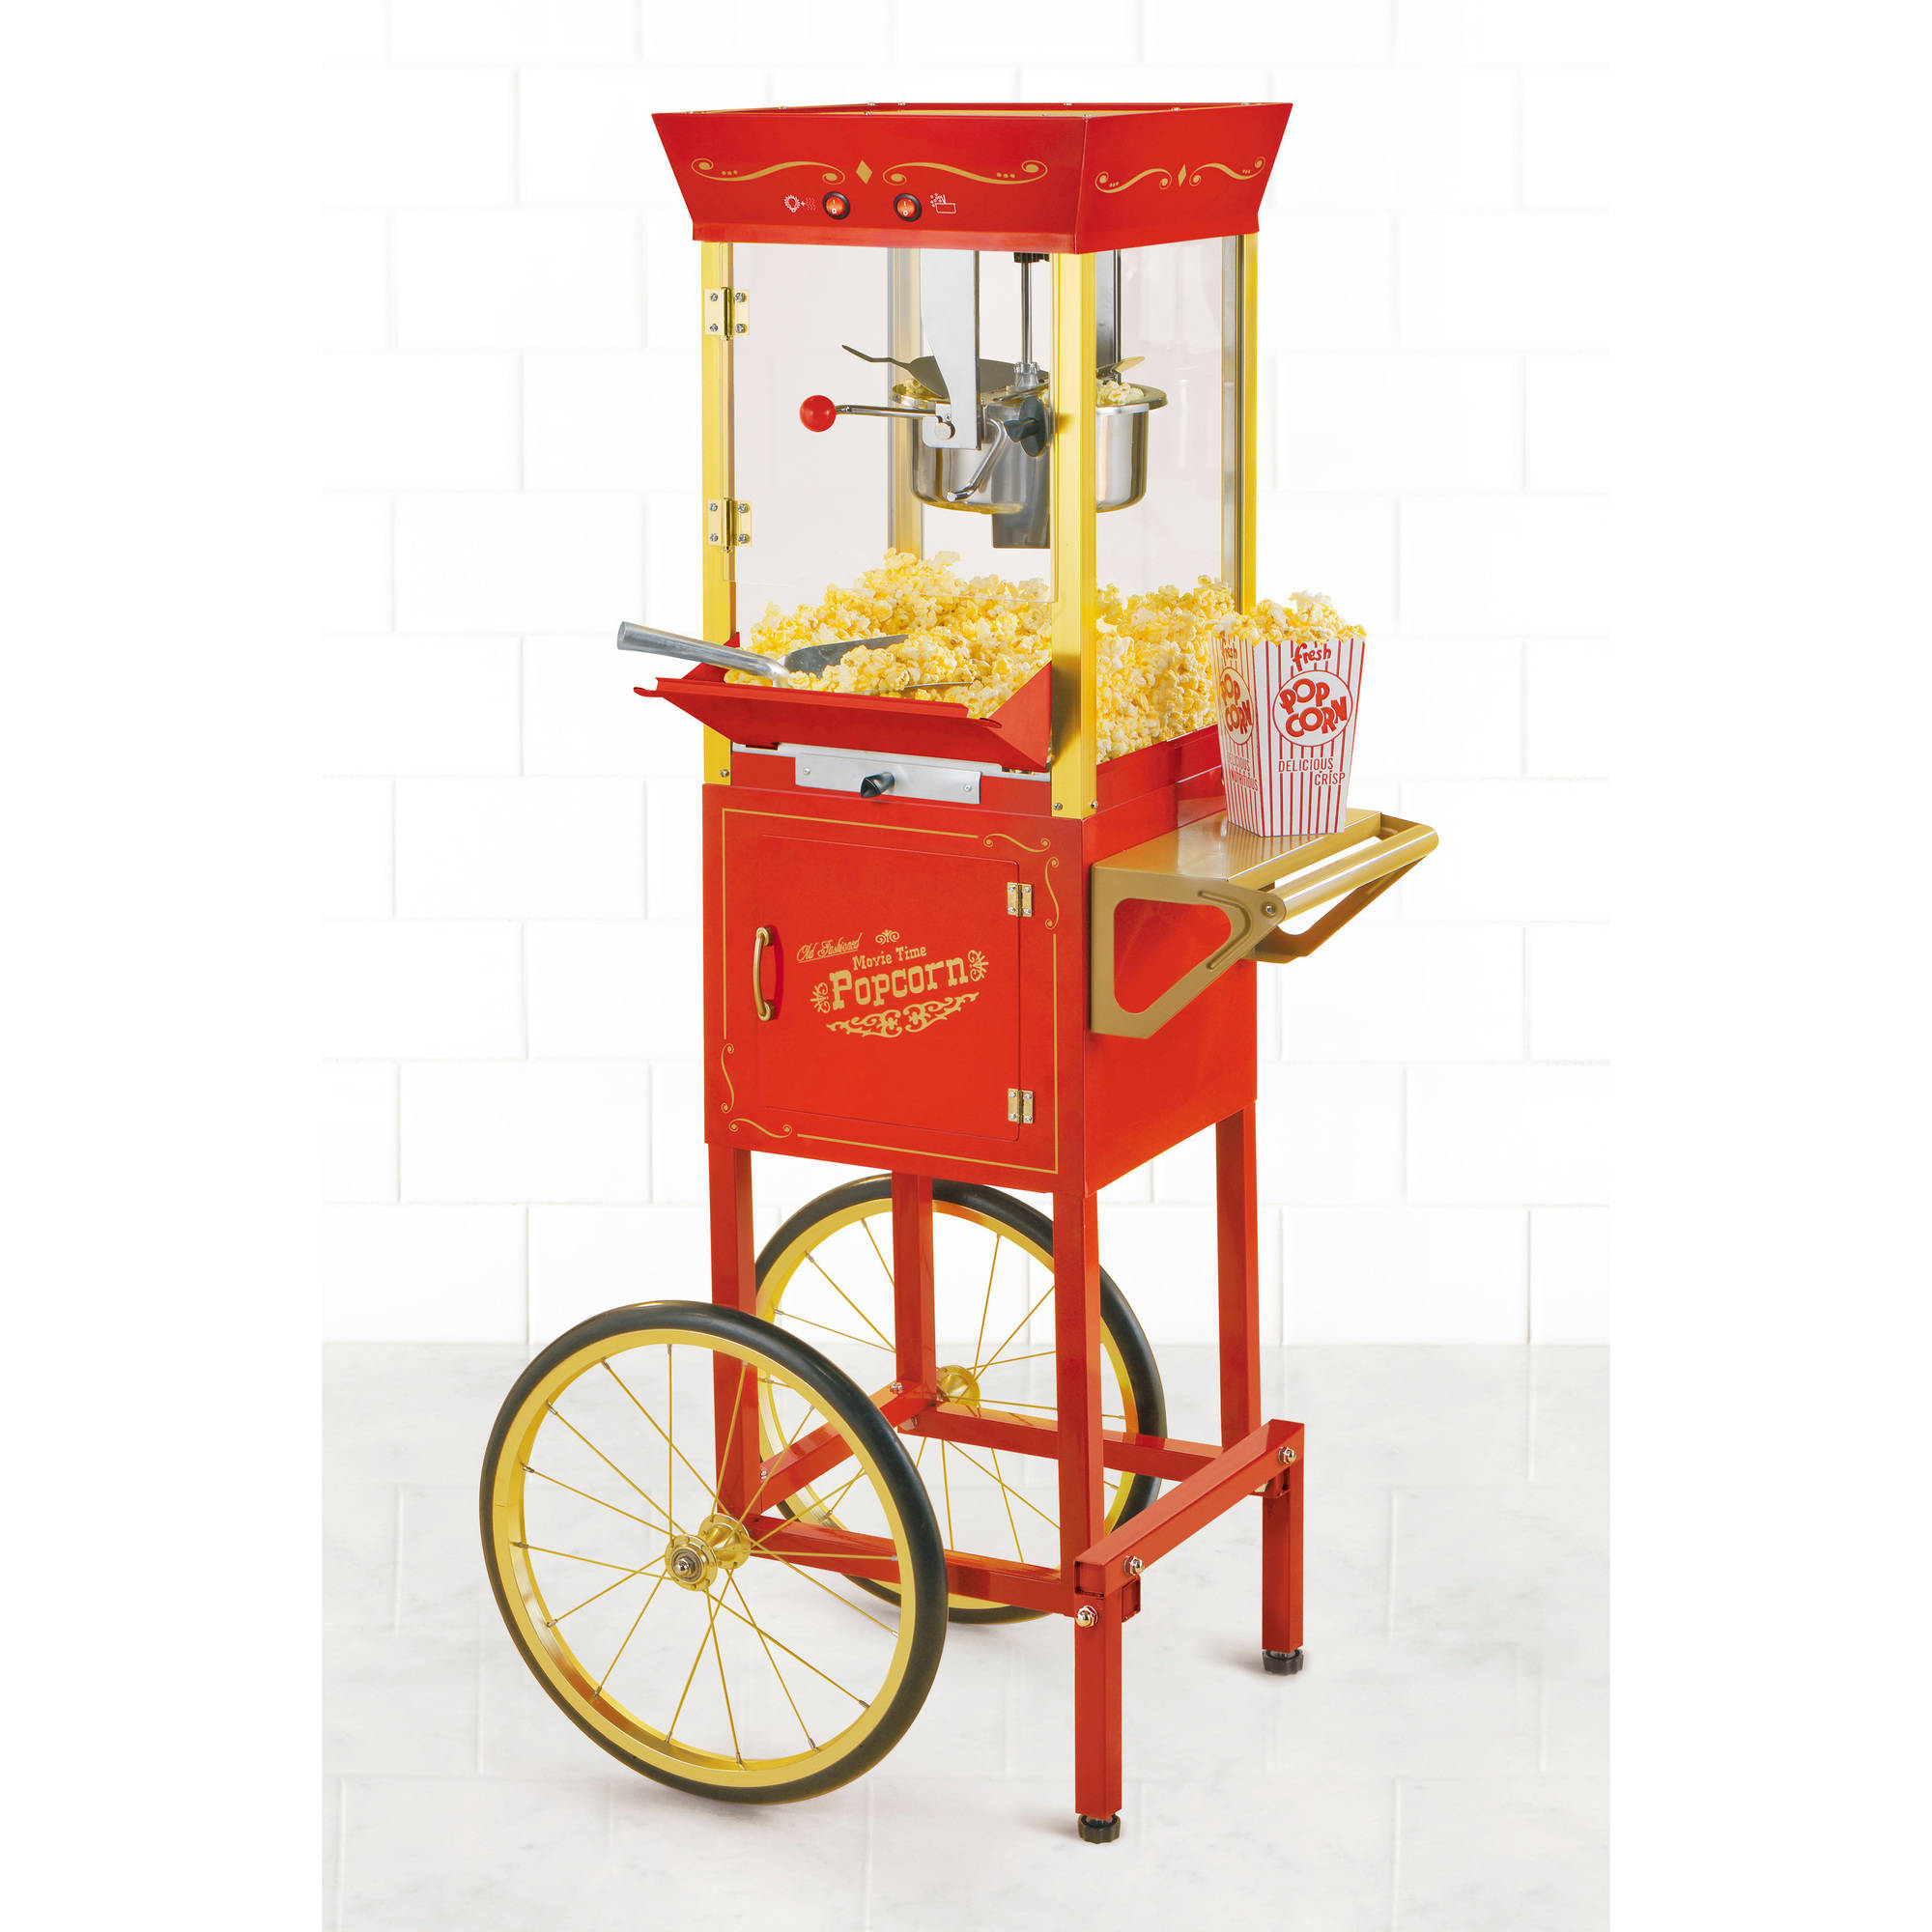 Nostalgia Appliances Popcorn Cart Vintage Movie Theatre Popcorn Machine, Red - image 1 of 6